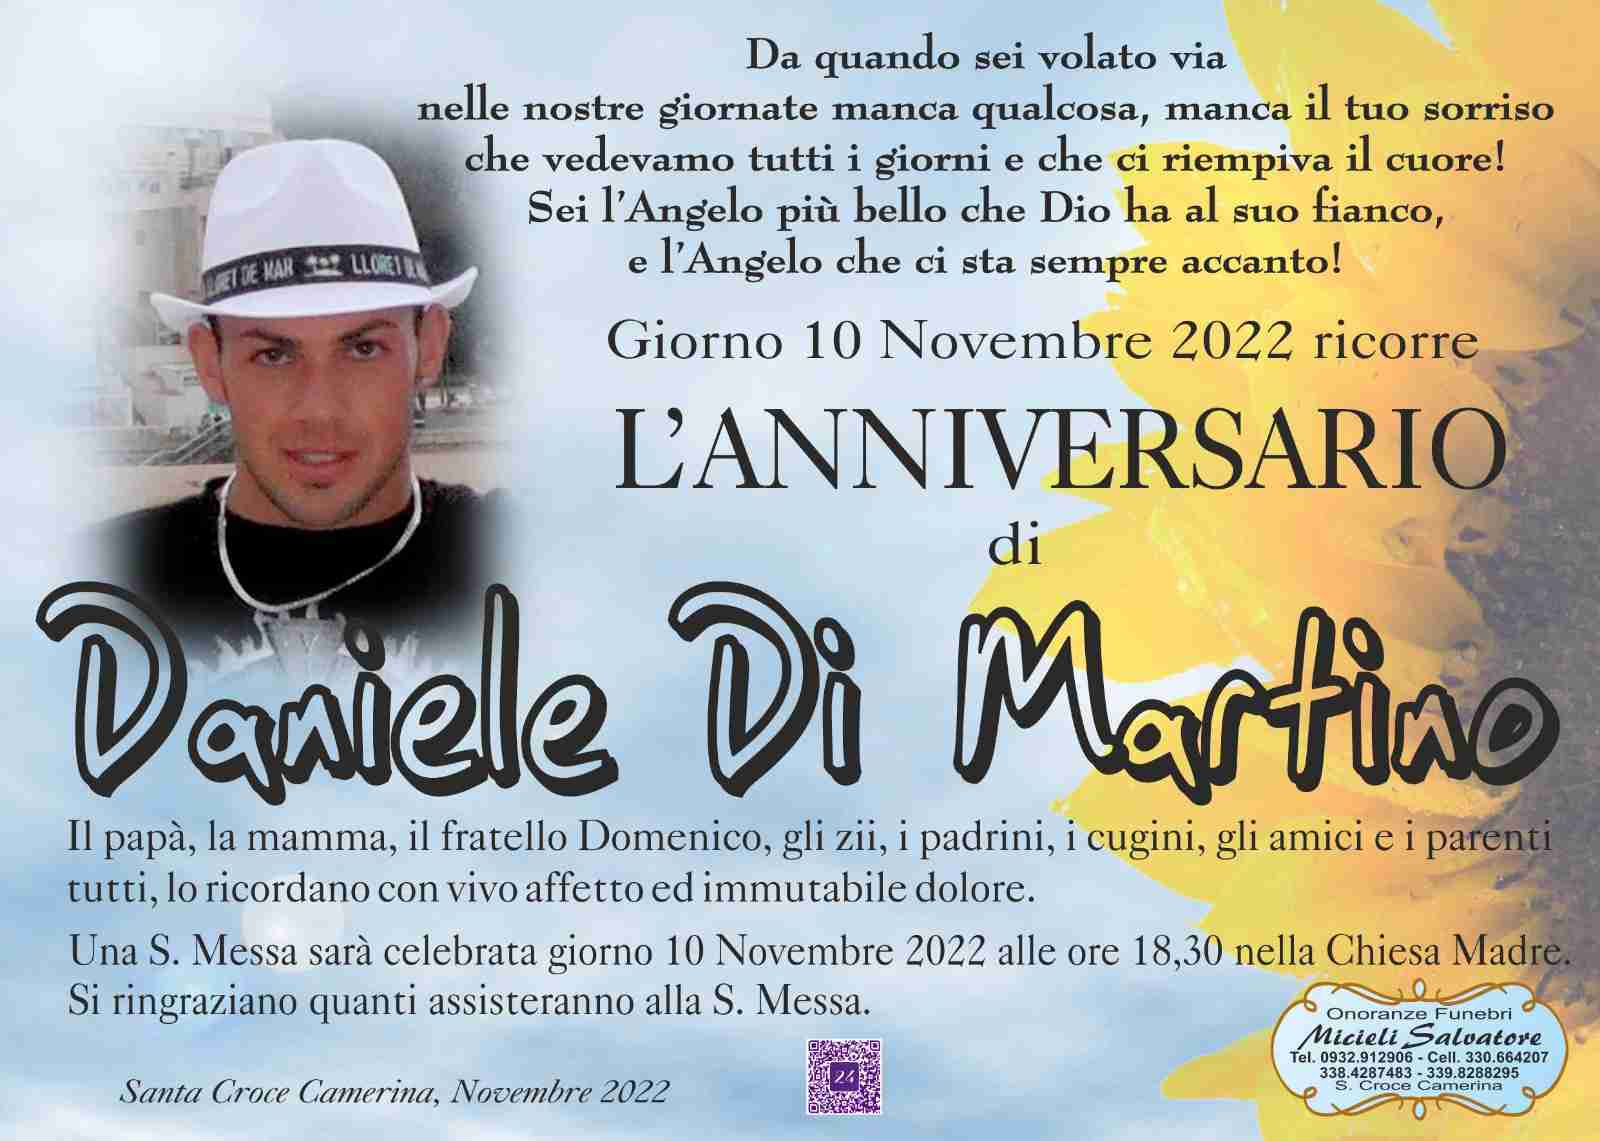 Daniele Di Martino